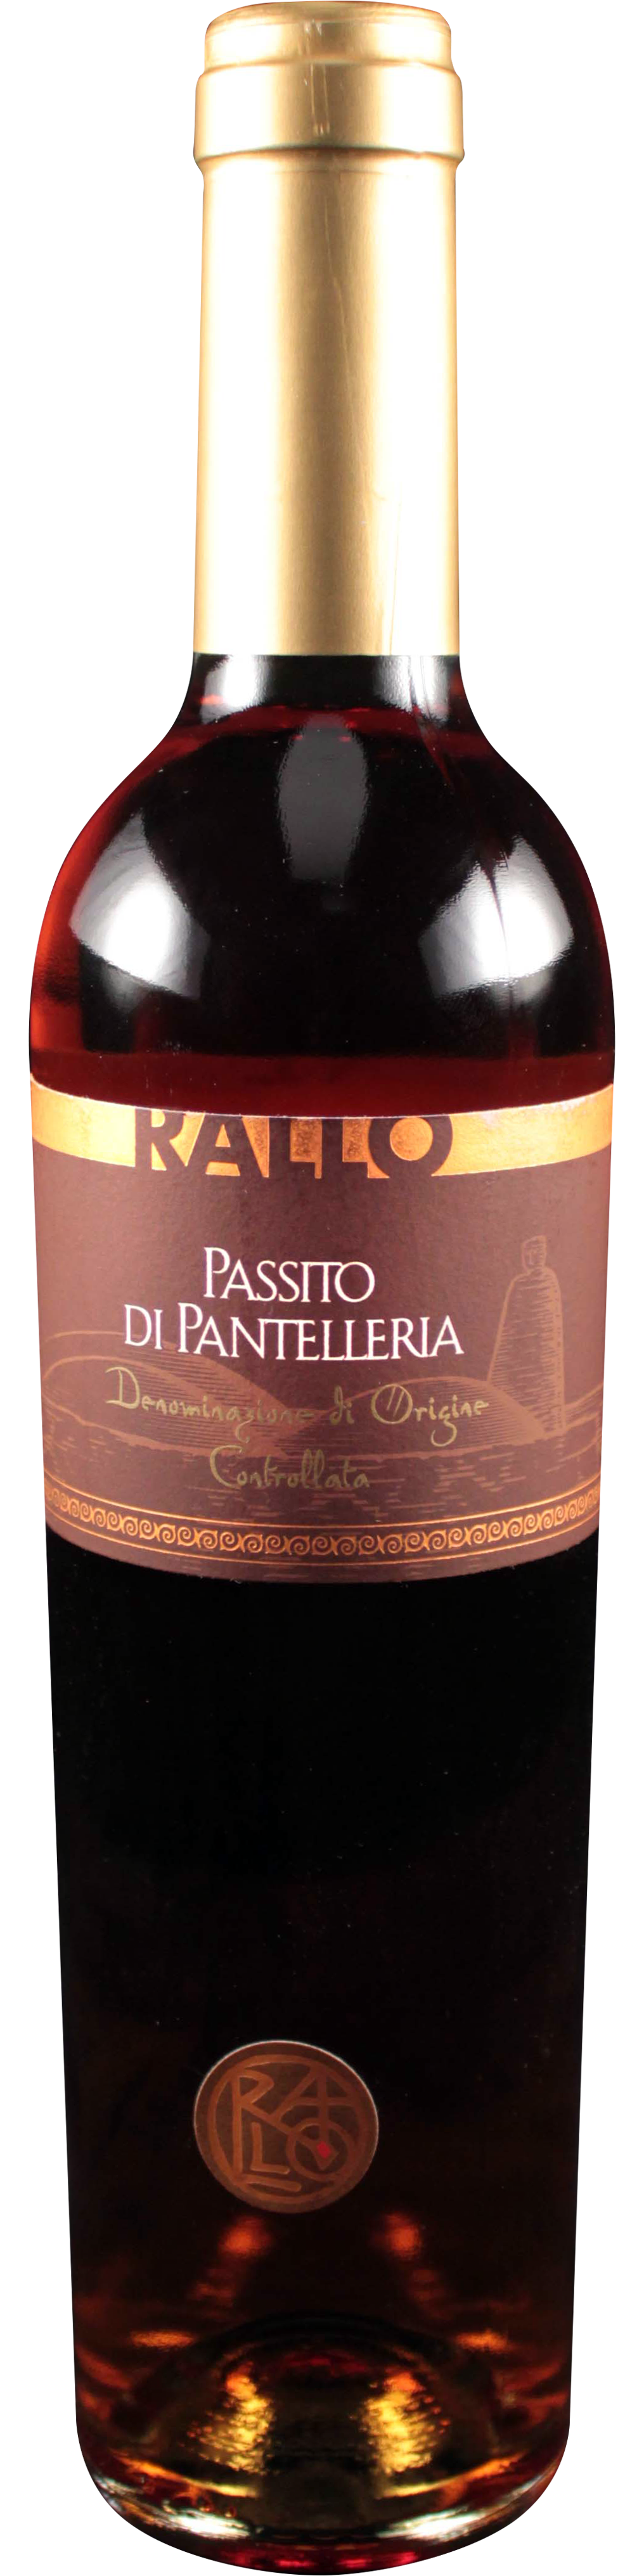 Bottle shot of 2008 Passito de Pantelleria